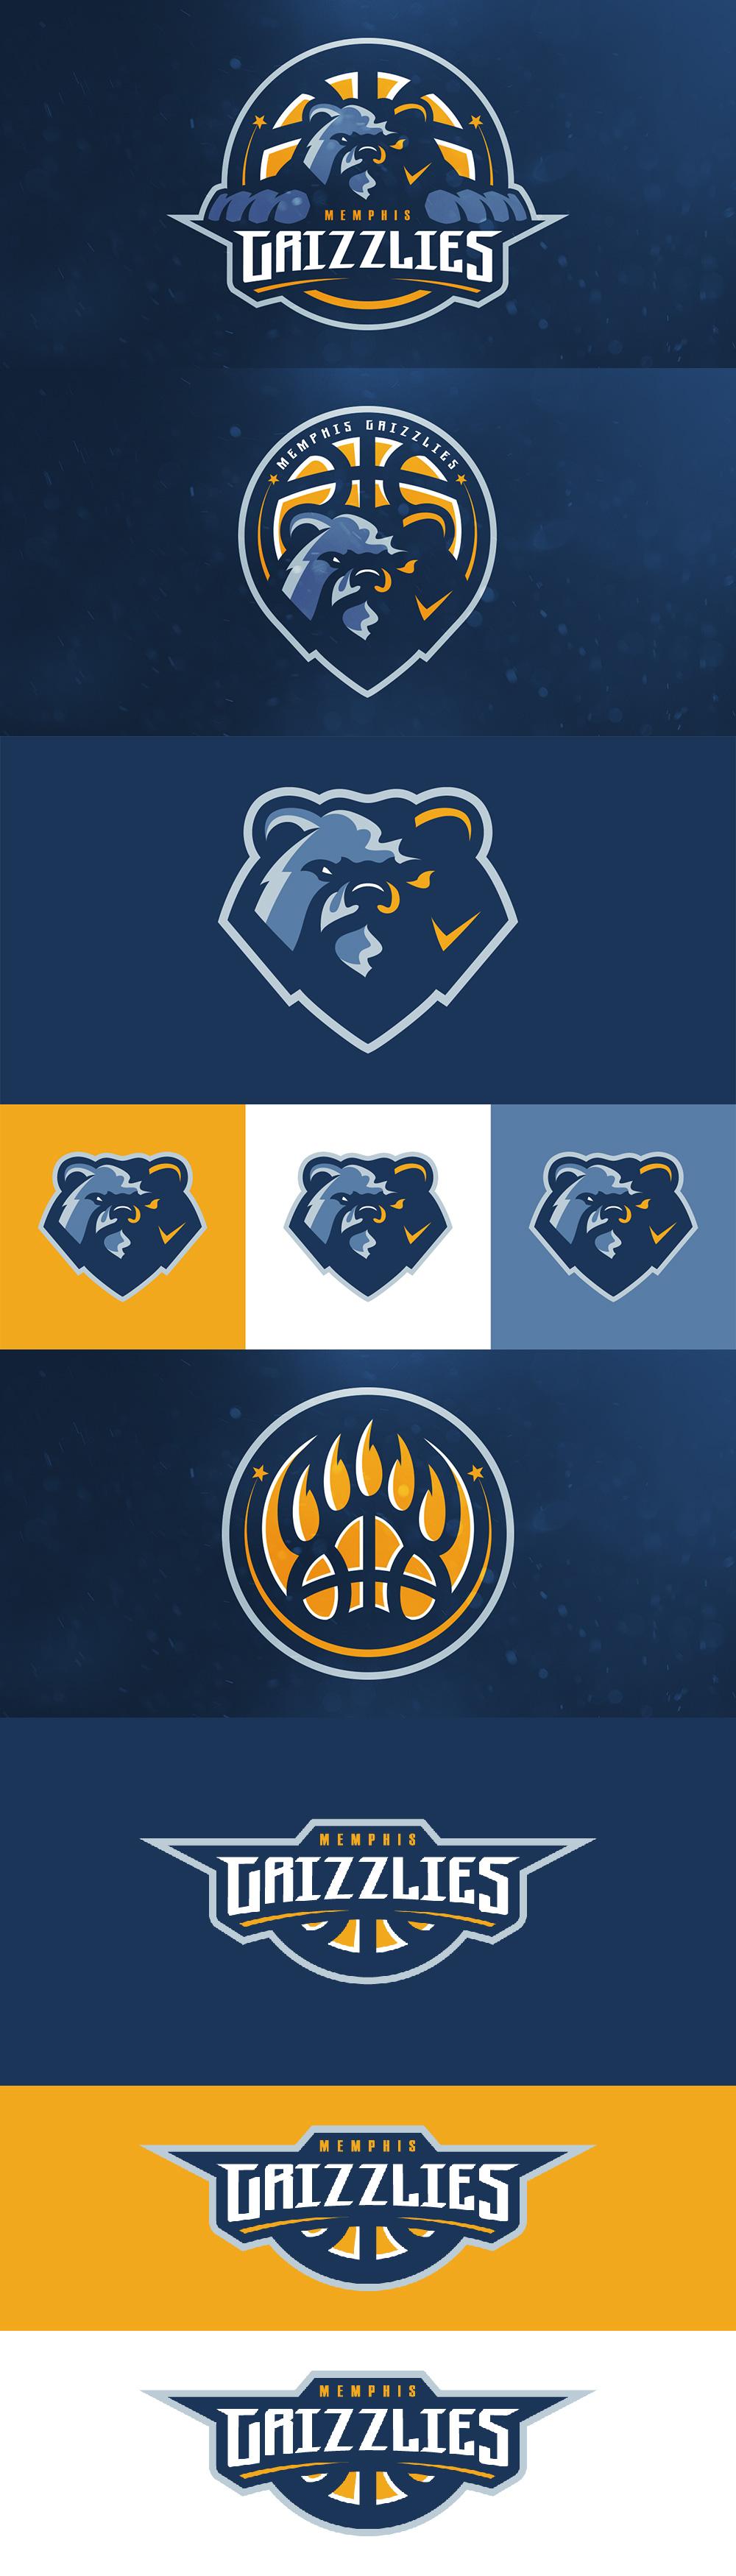 Team Concept Logo - 30+ Awesome Basketball Team Logo and Identity Designs